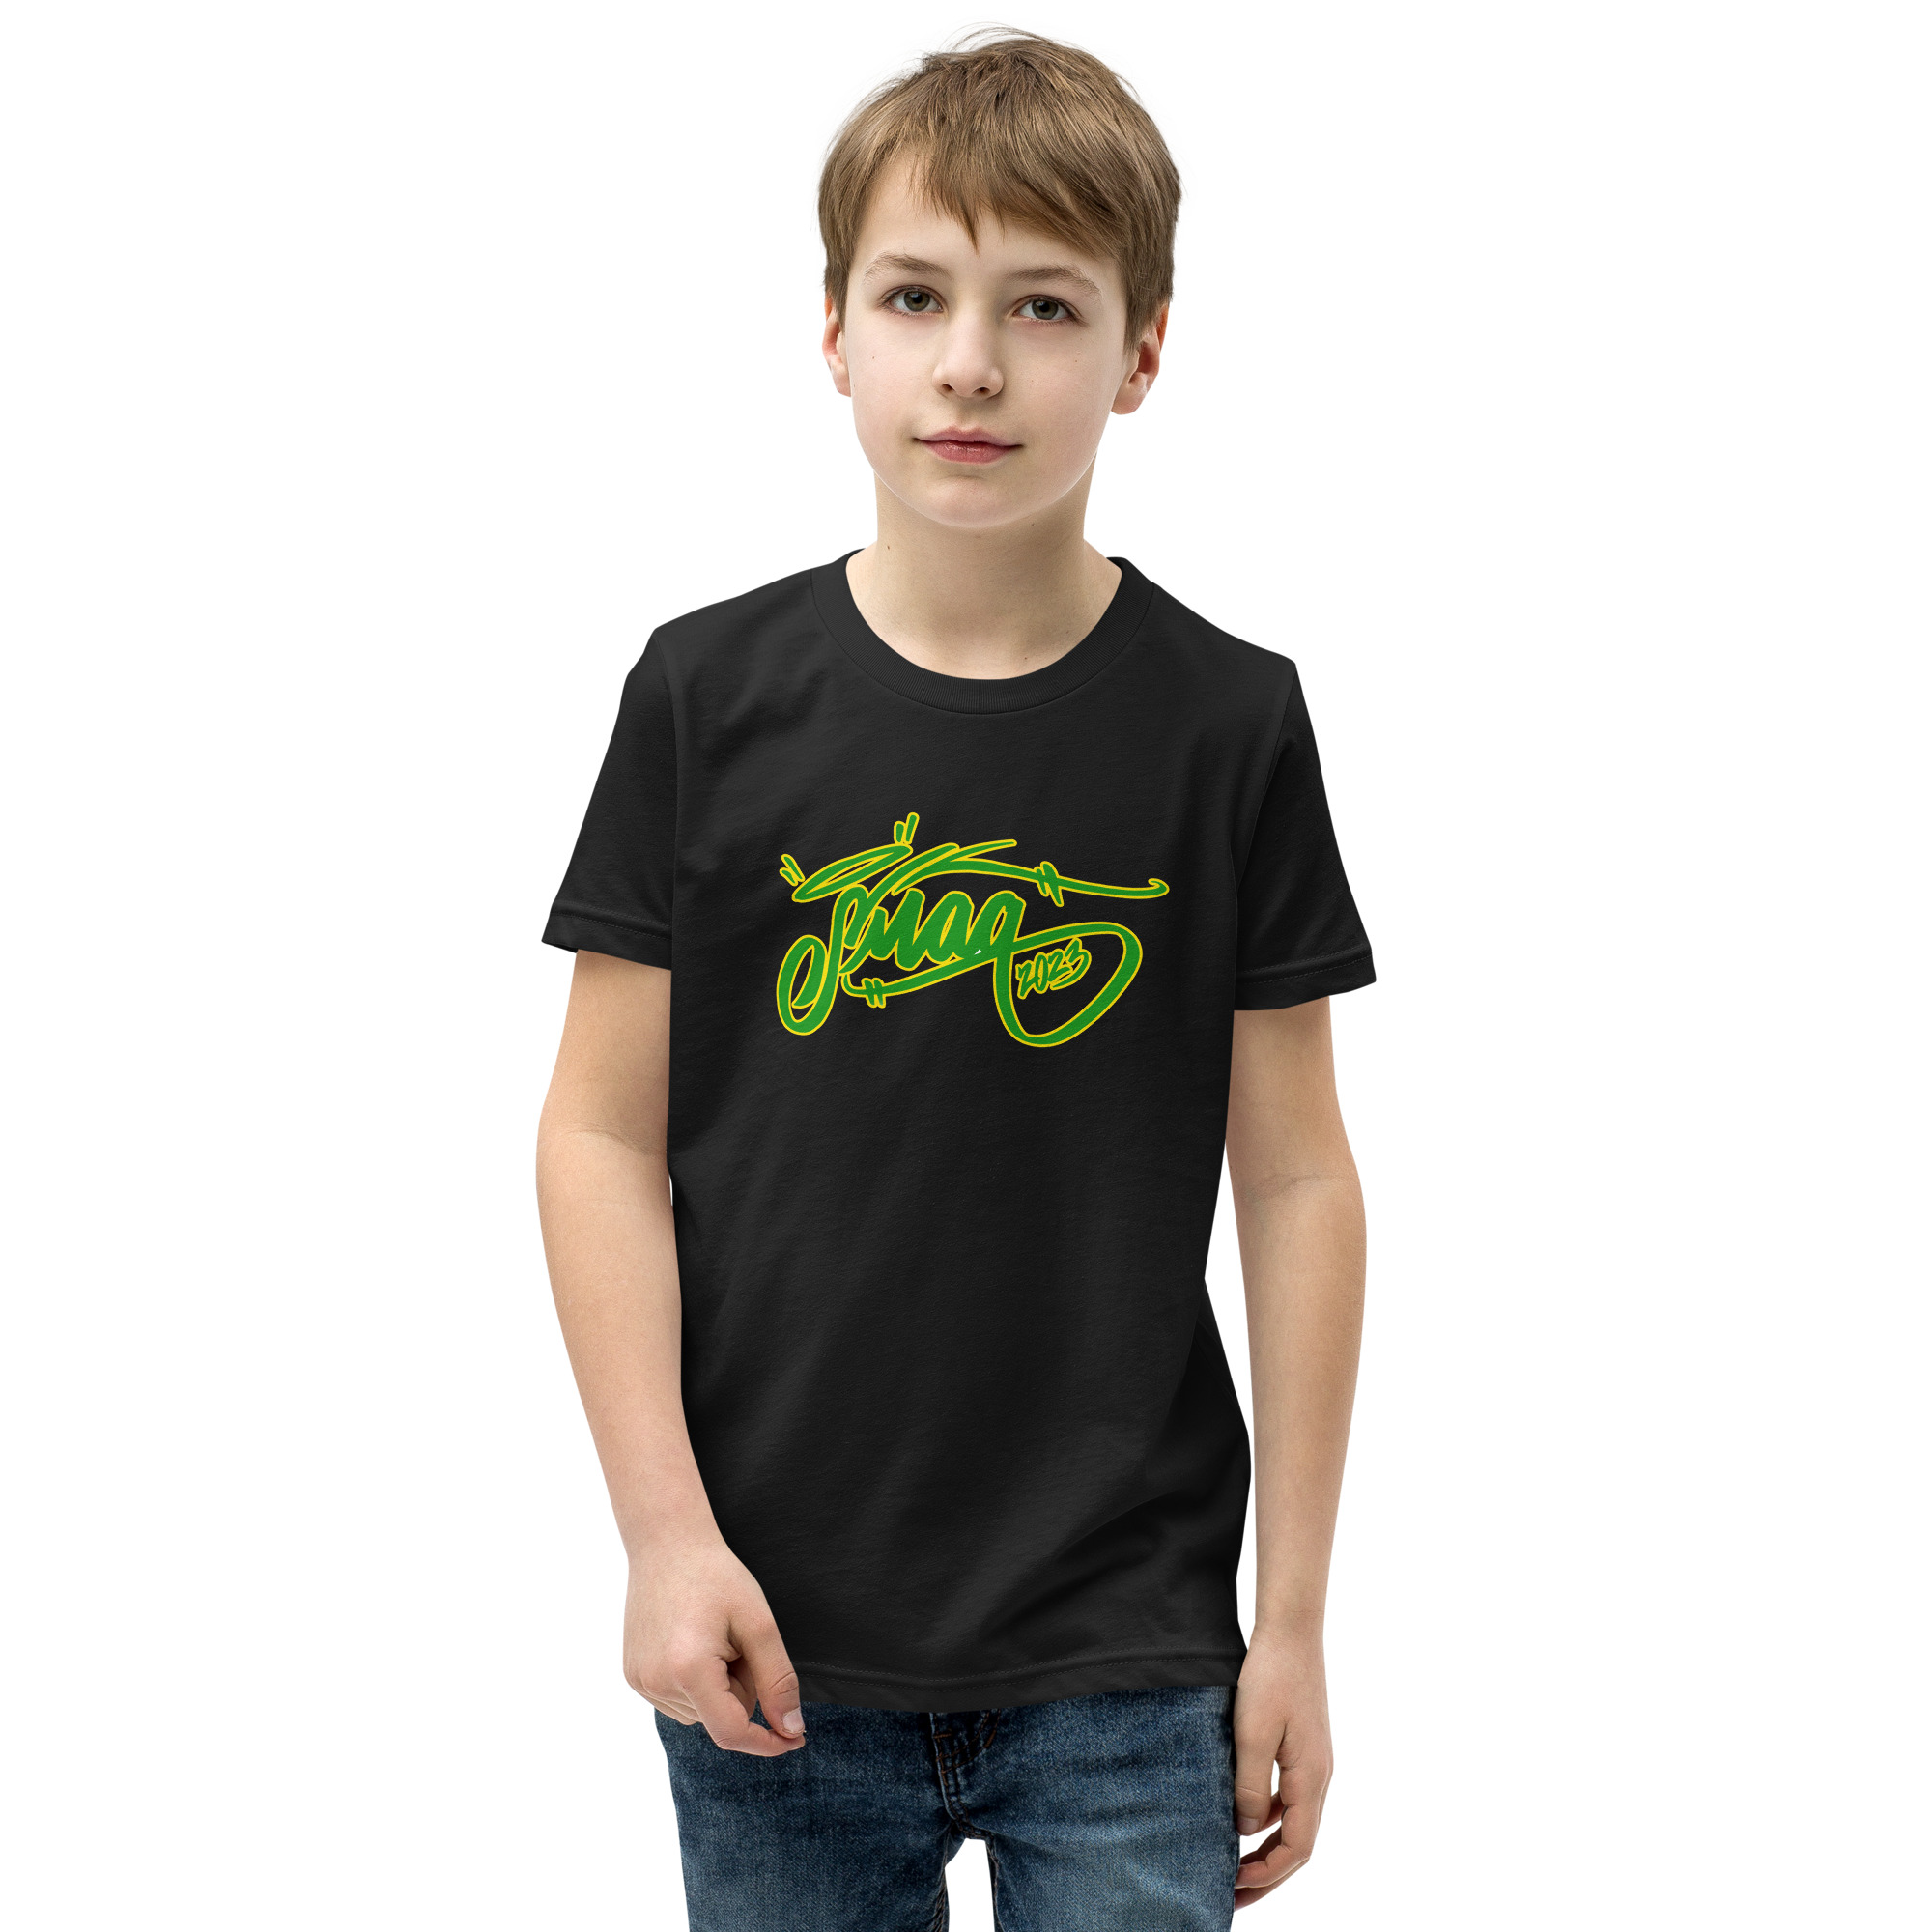 SMAQ Green Script Graffiti Tag Youth Short Sleeve T-Shirt